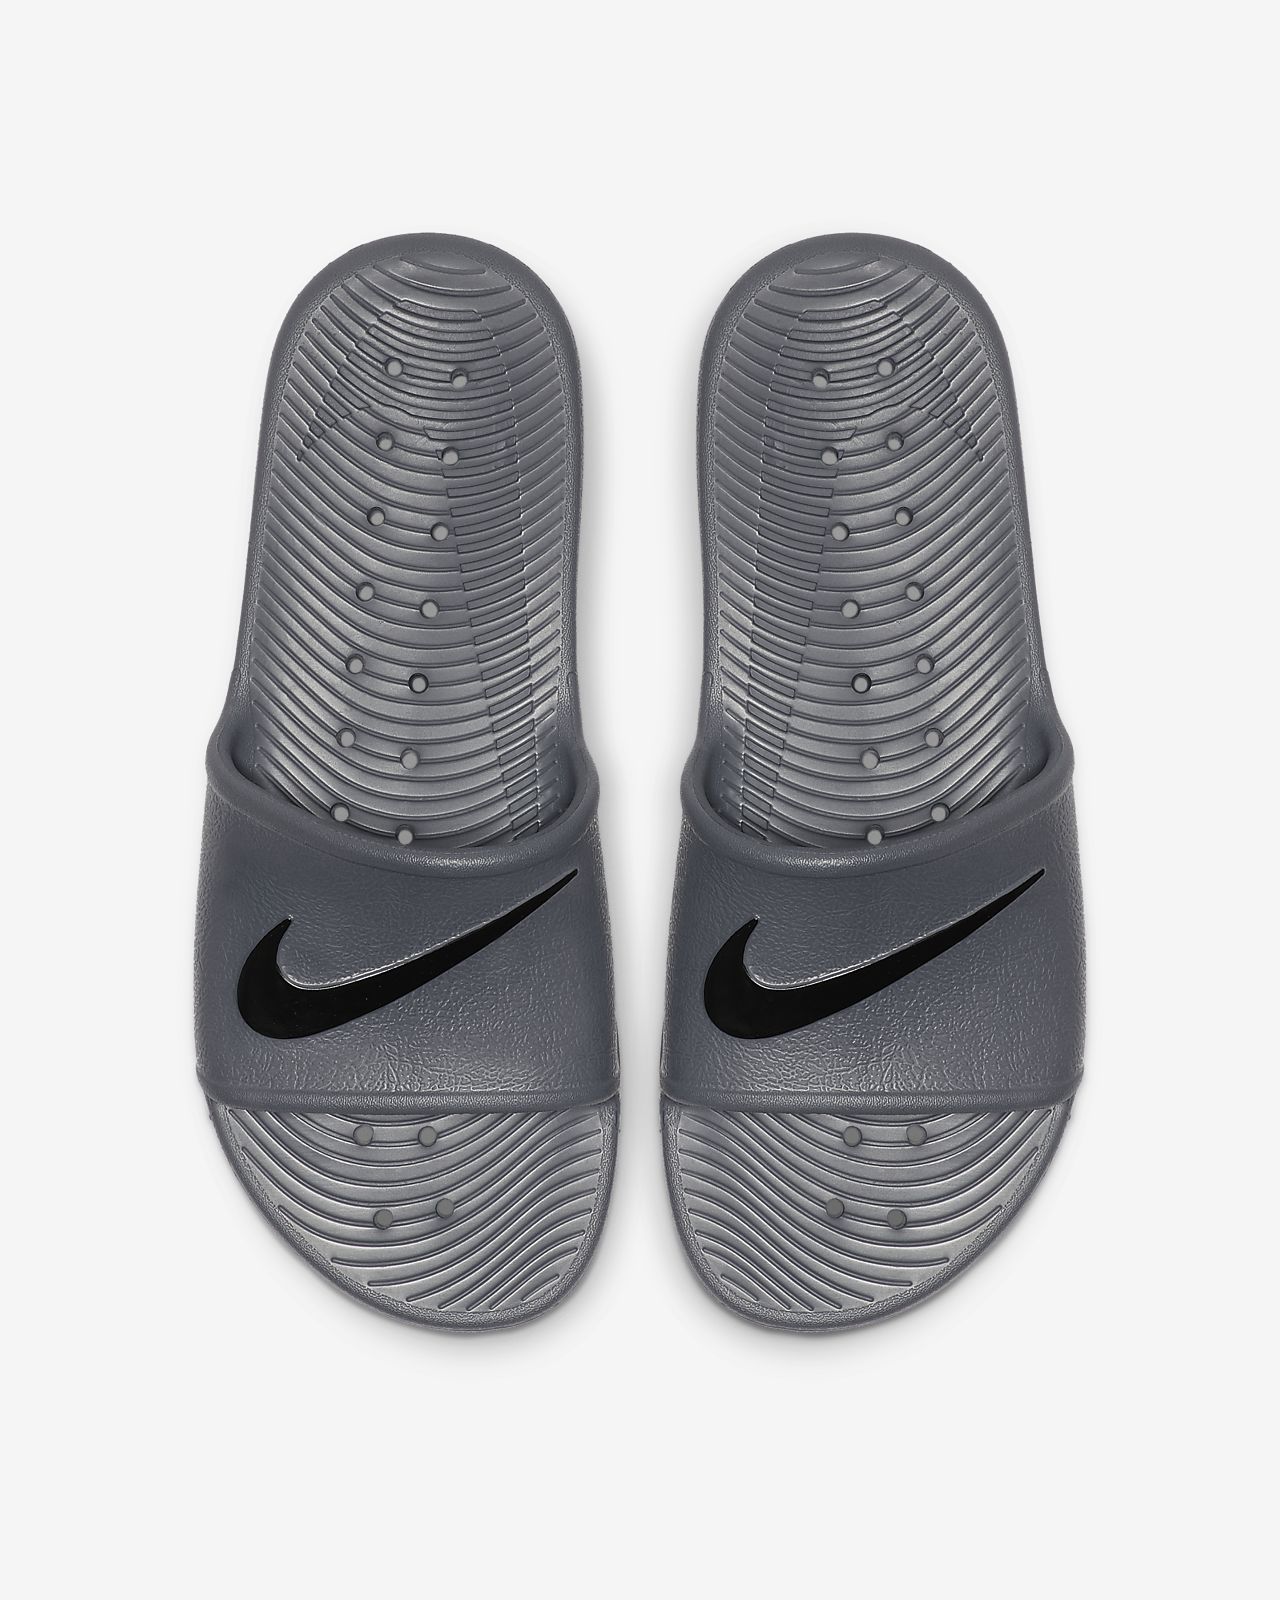 nike slippers gray